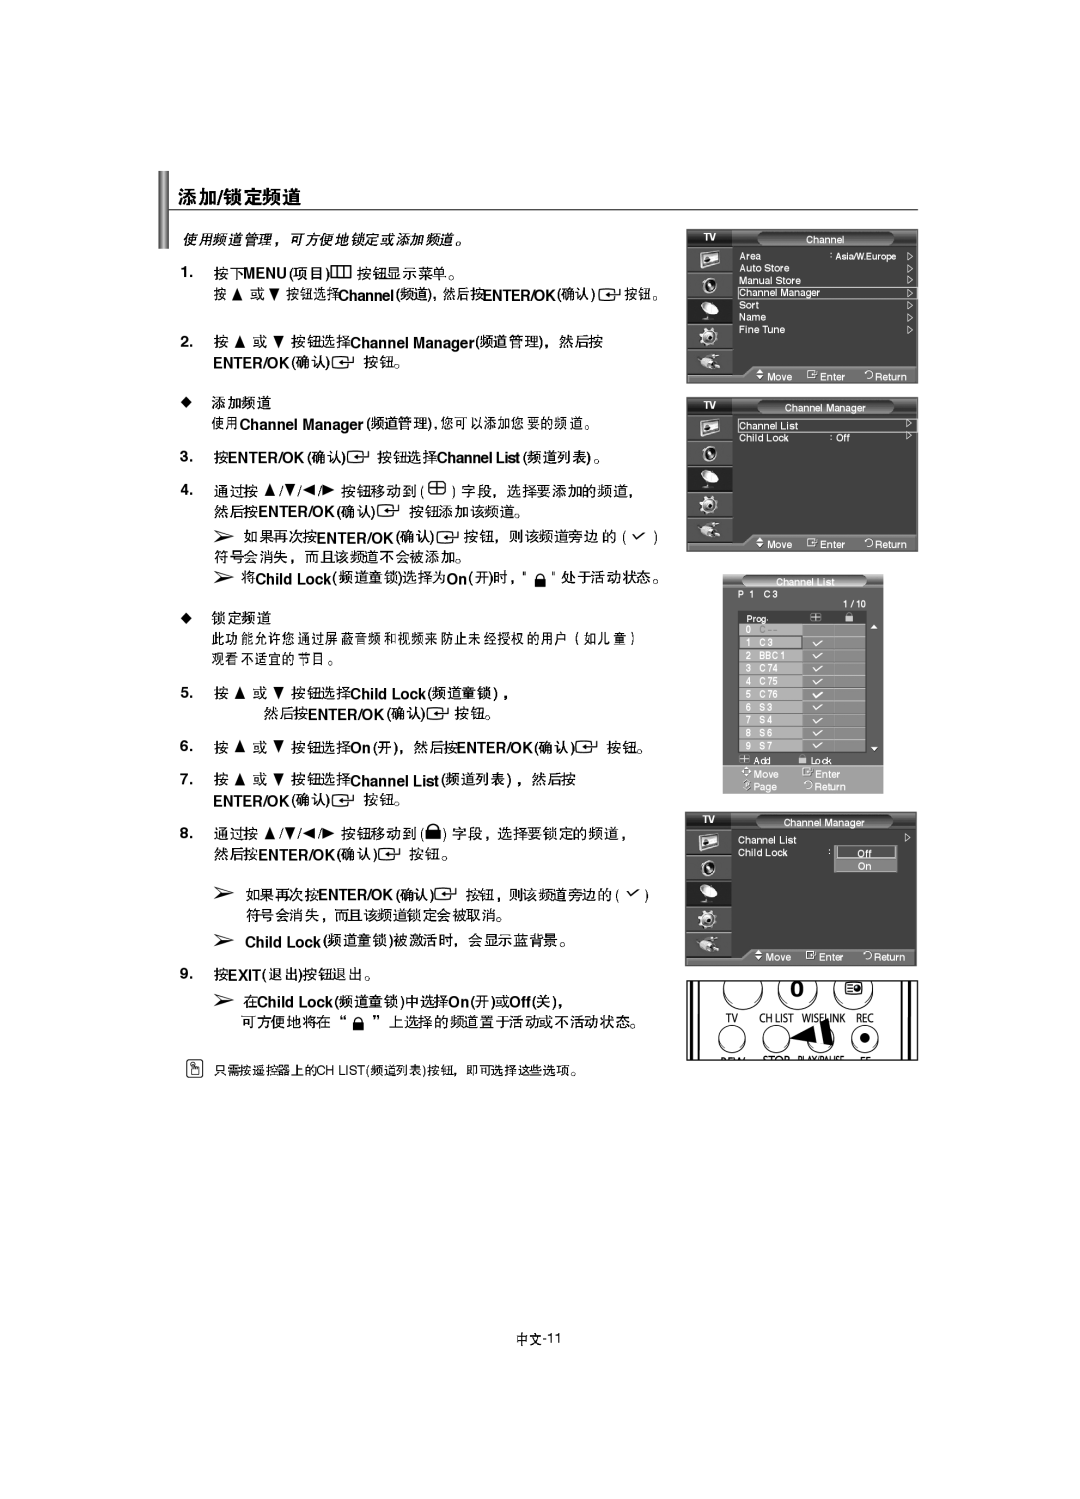 Samsung LA46F8, LA52F8, LA40F8 manual   ChannelENTER/OK, Child Lock, Ch List 